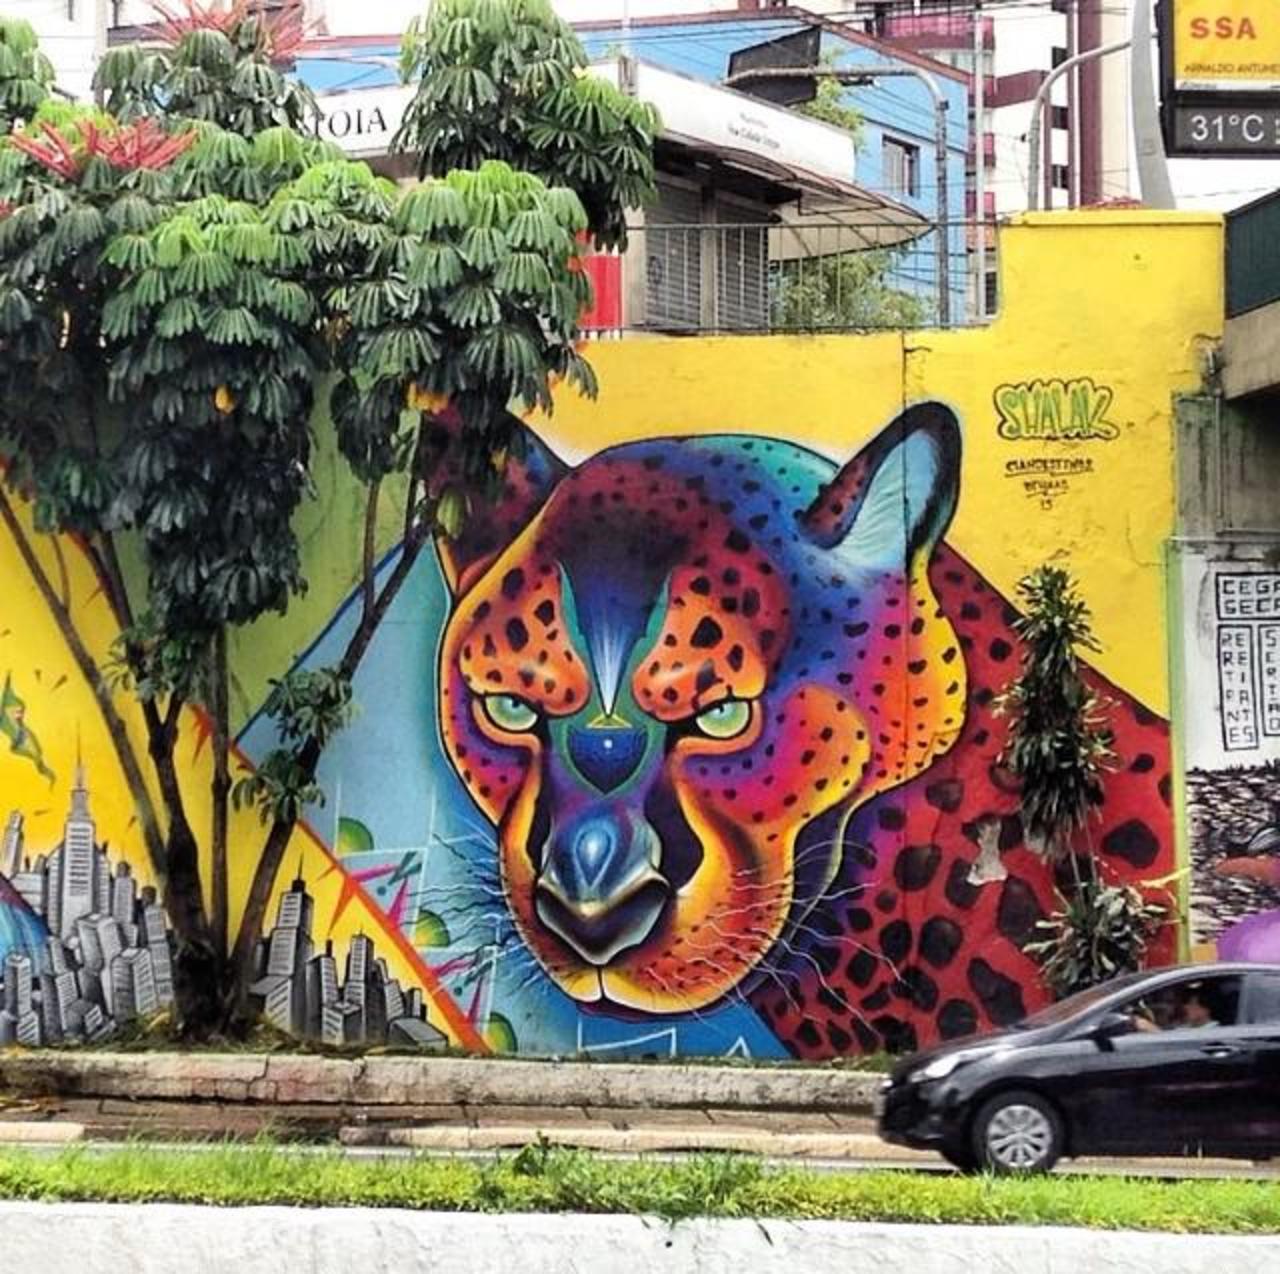 Artist ShalakAttack beautiful & colourful nature in Street Art piece in São Paulo 

#art #graffiti #mural #streetart http://t.co/XRlF1kVLVa